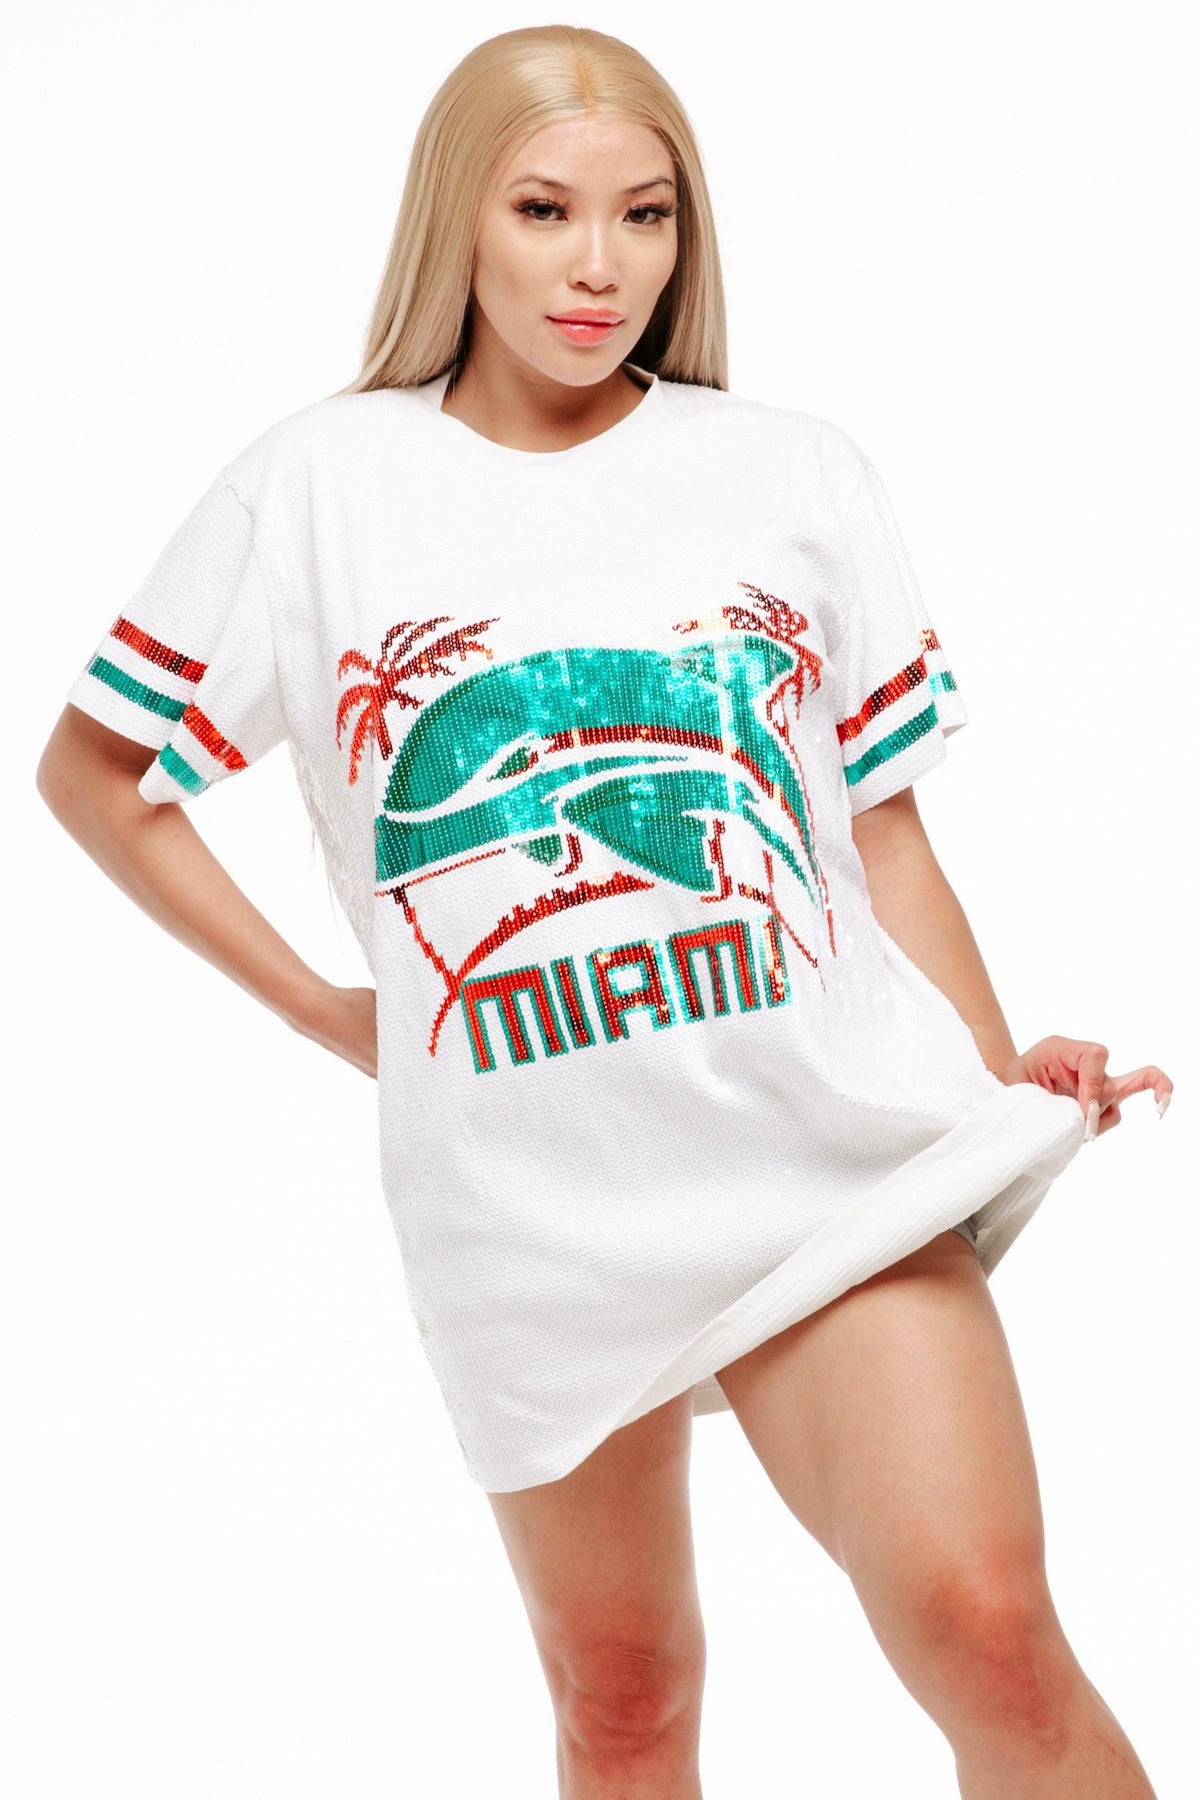 Miami Football Sequin Dress - SEQUIN FANS